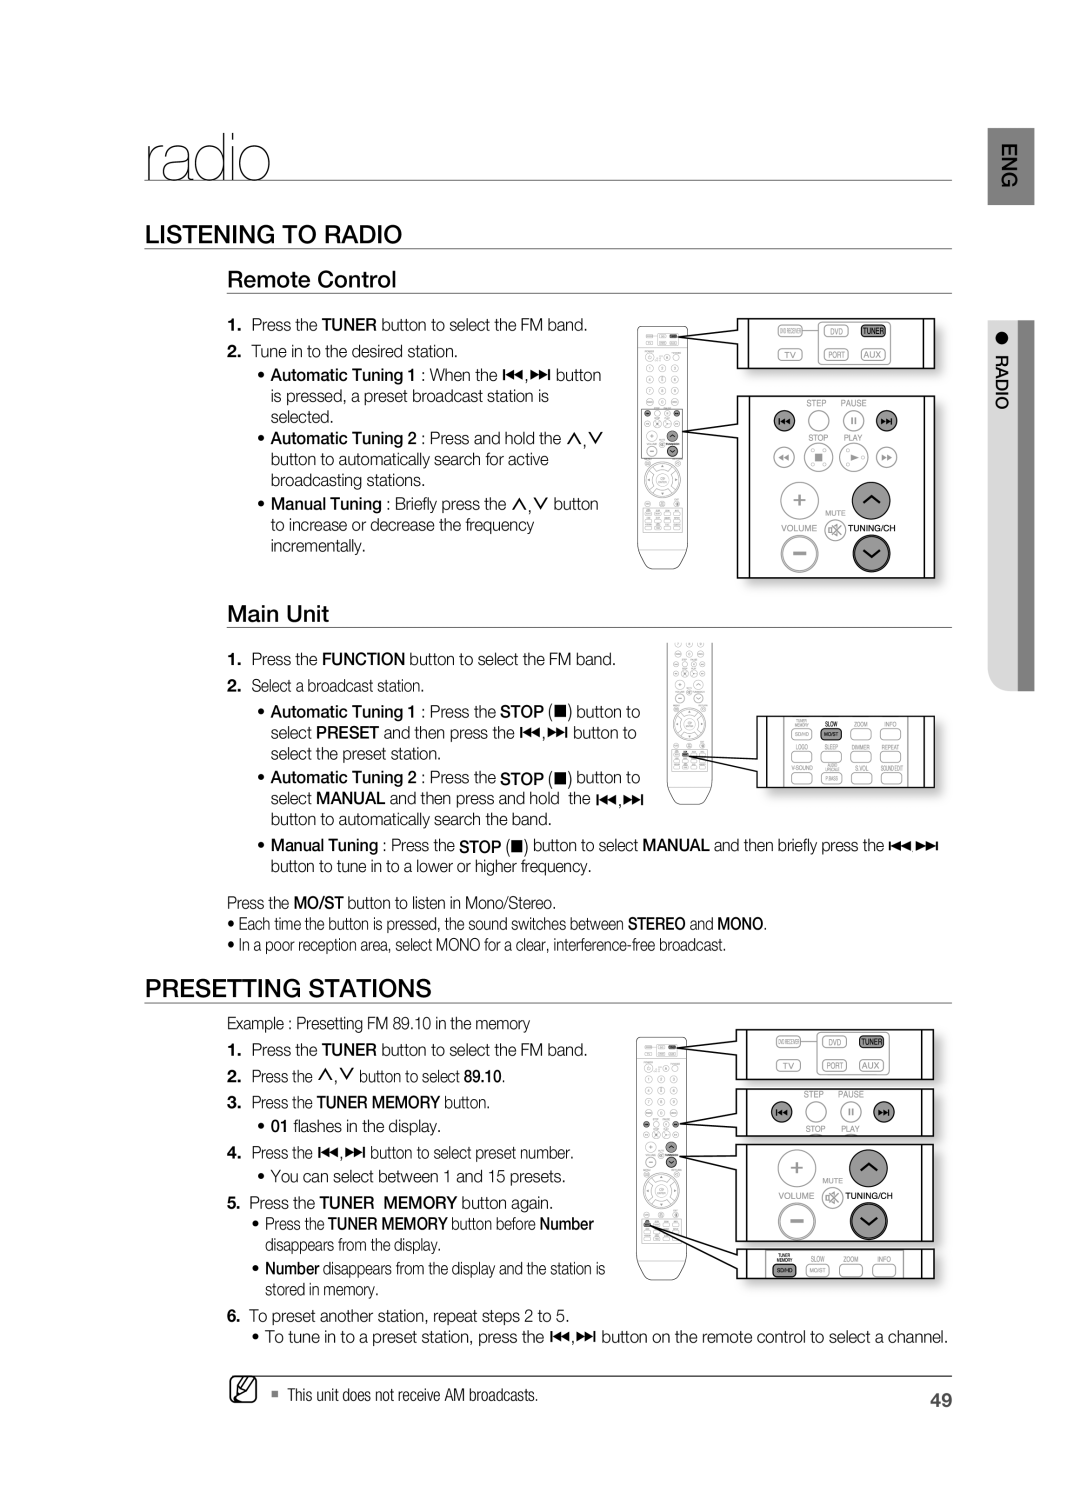 Samsung HT-X810 user manual radio, lISTENING TO rADIO, PrESETTING STATIONS, remote Control, Main Unit 